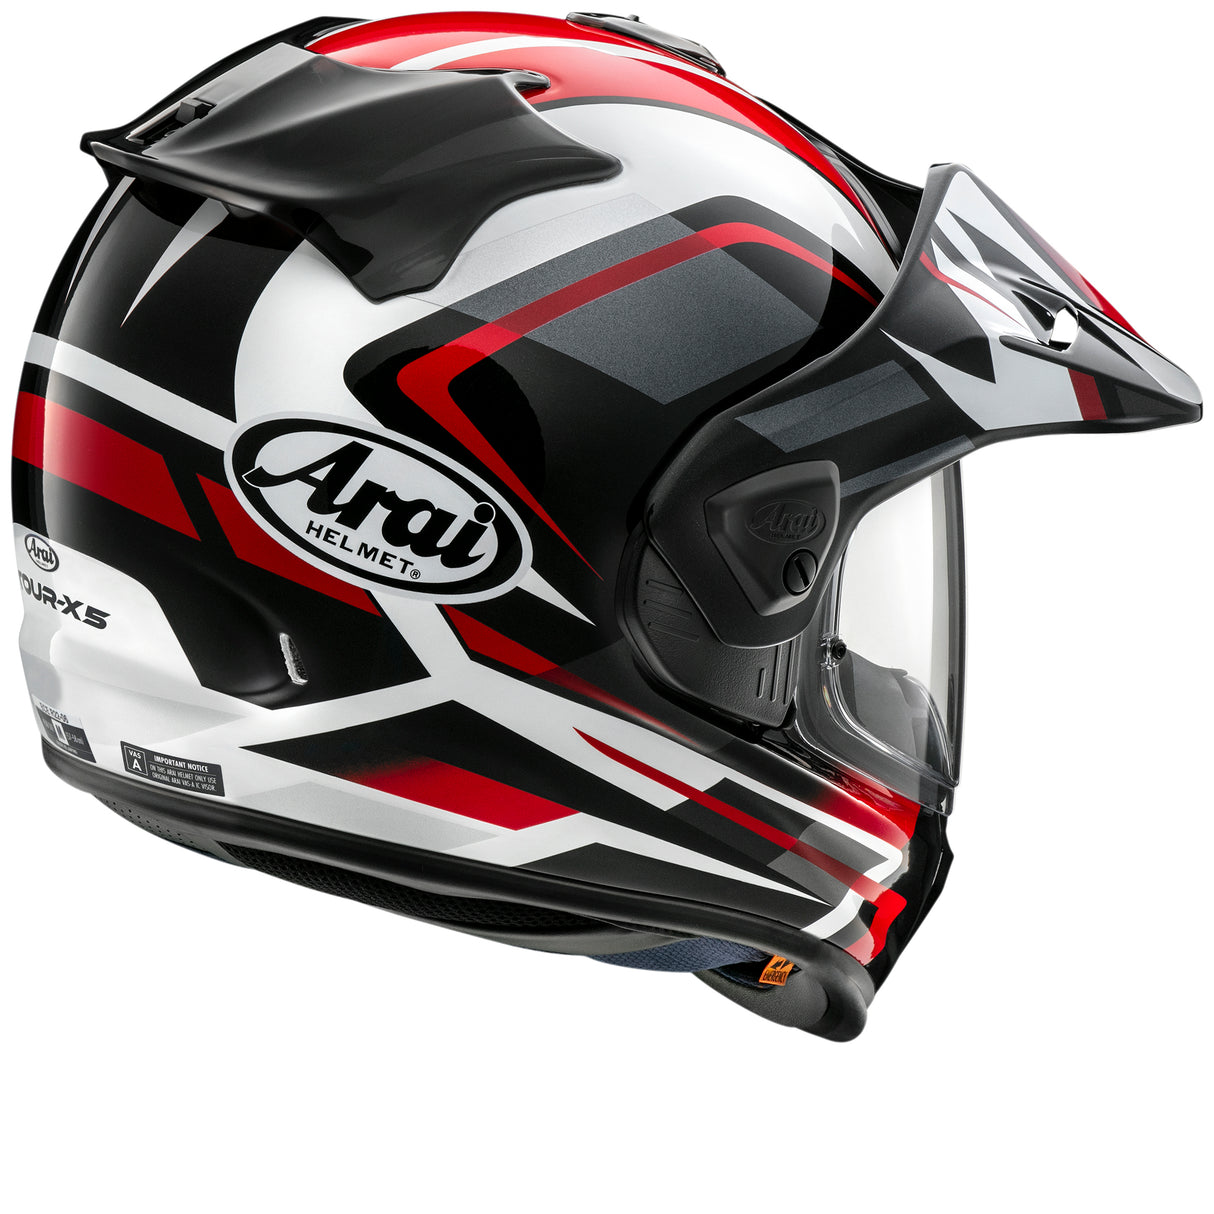 Arai Tour-X5 Helmet Discovery Red